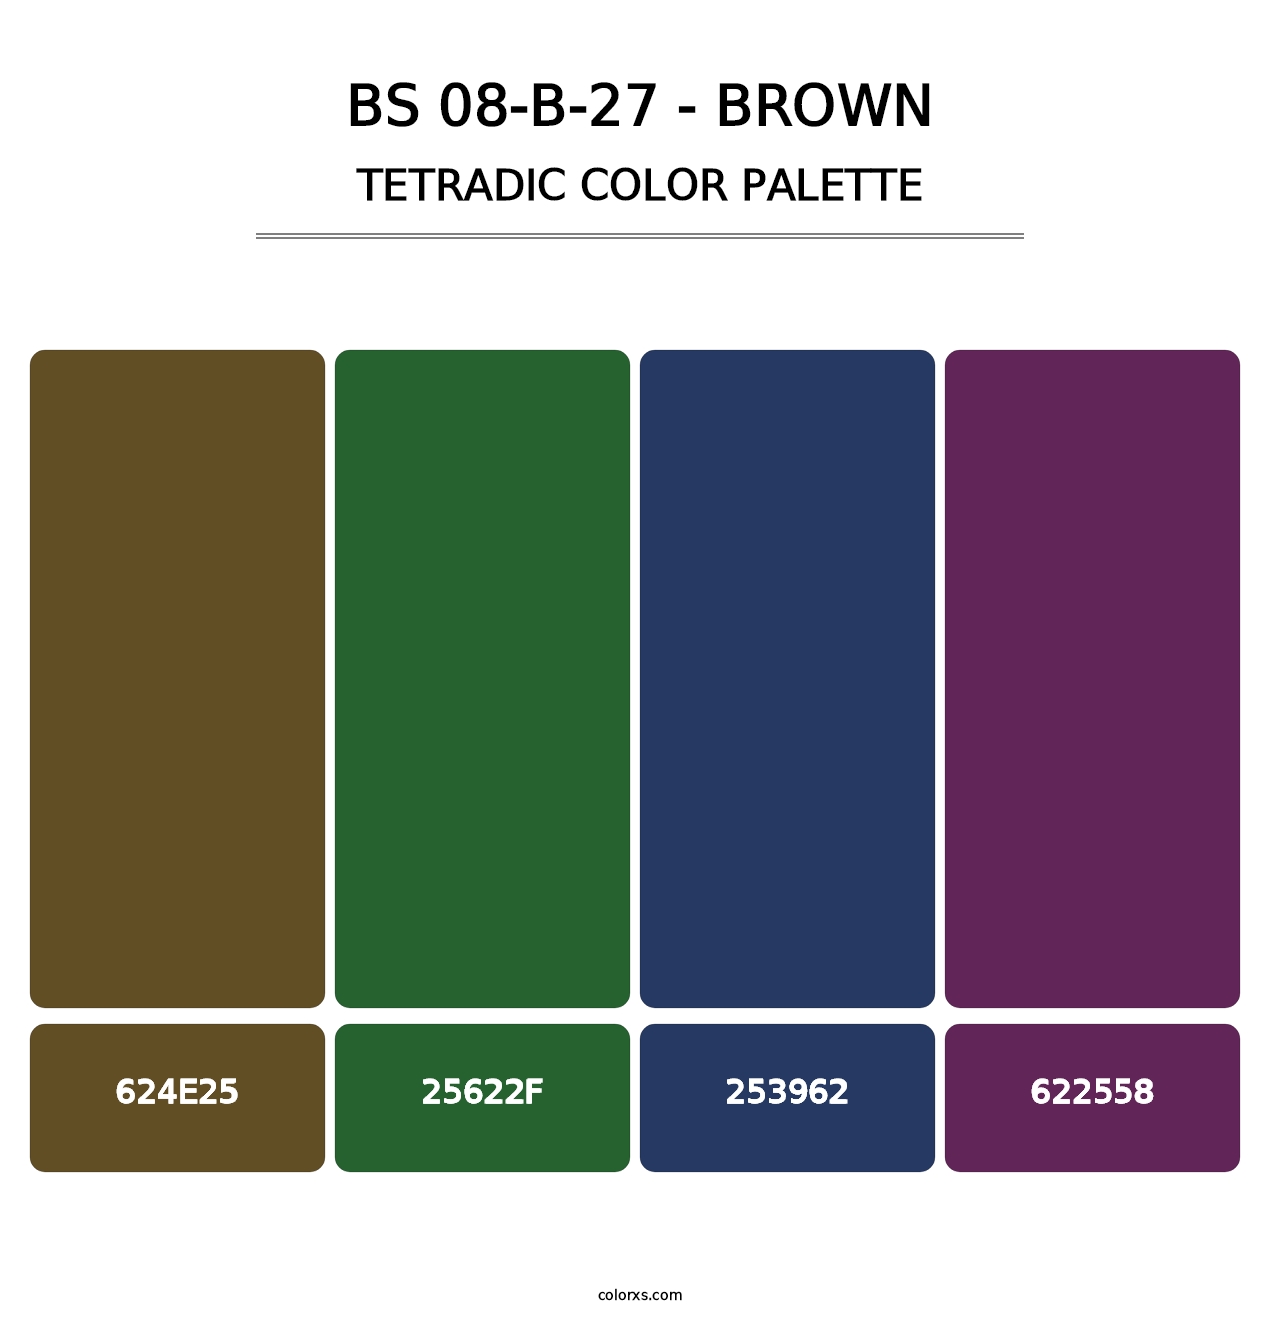 BS 08-B-27 - Brown - Tetradic Color Palette